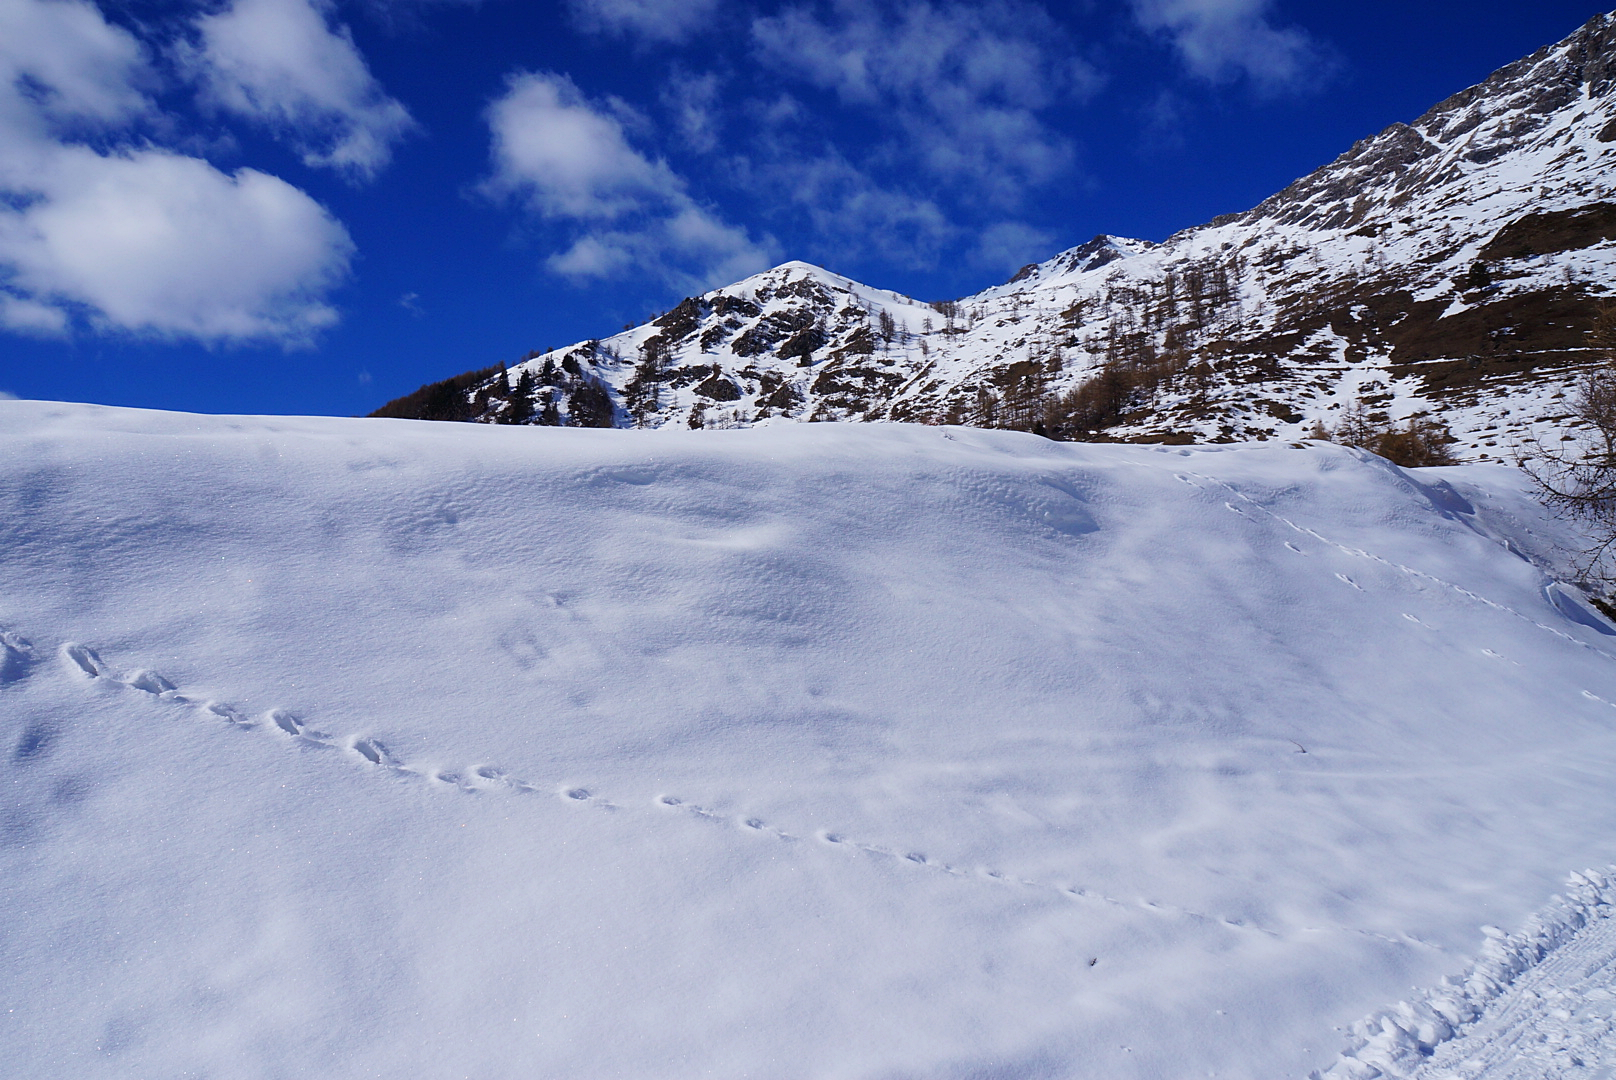 footprints on the snow...